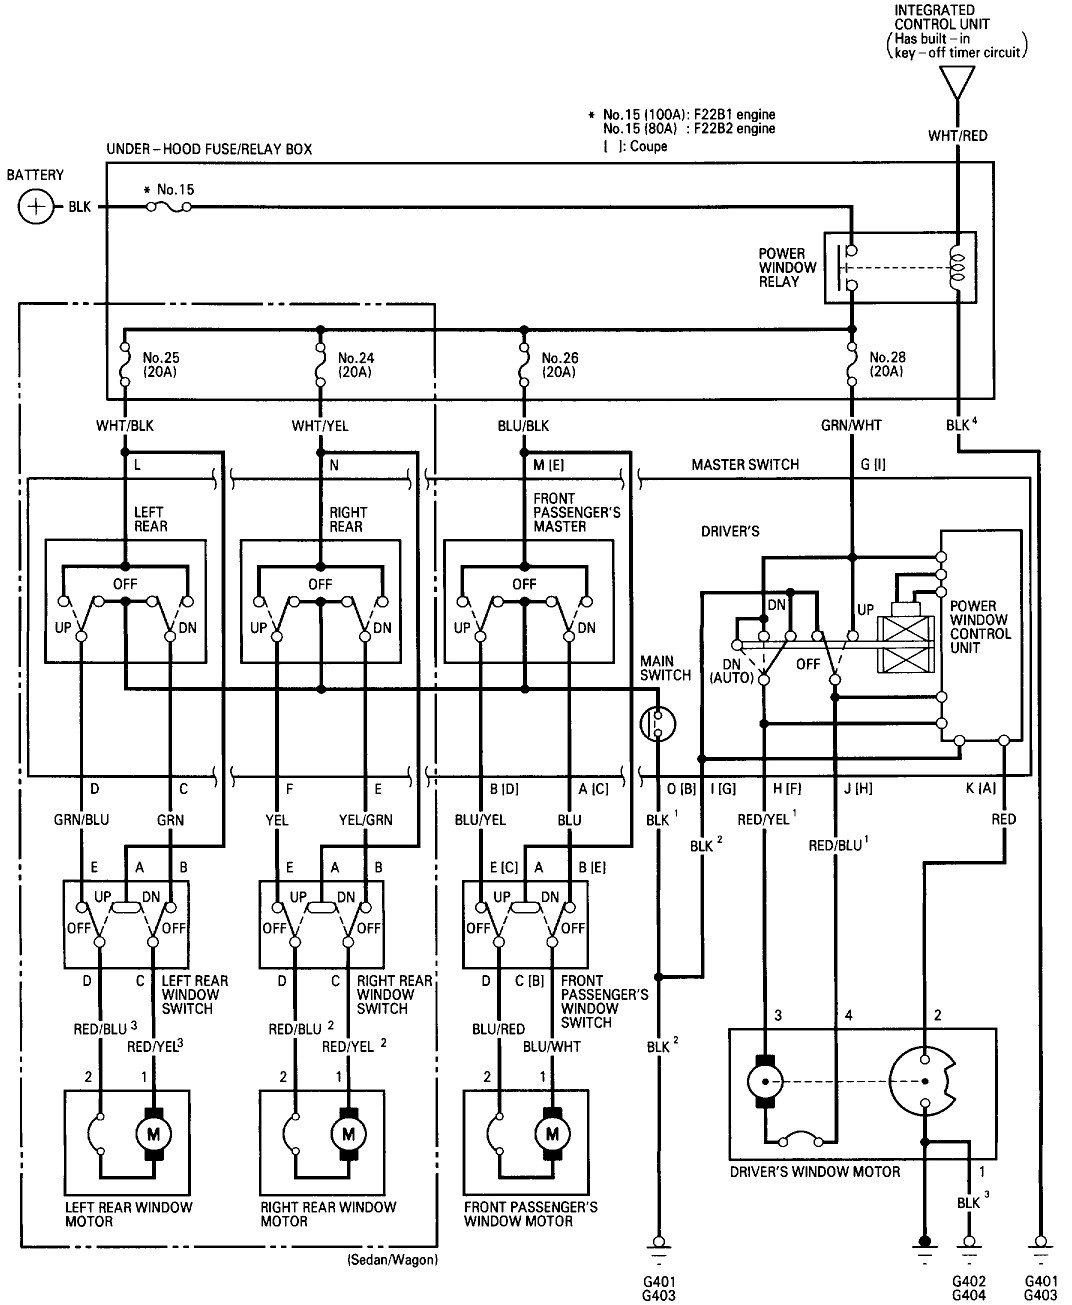 Wiring Diagram For 2003 Honda Accord Readingrat Net At 1995 Xmrc Amazing